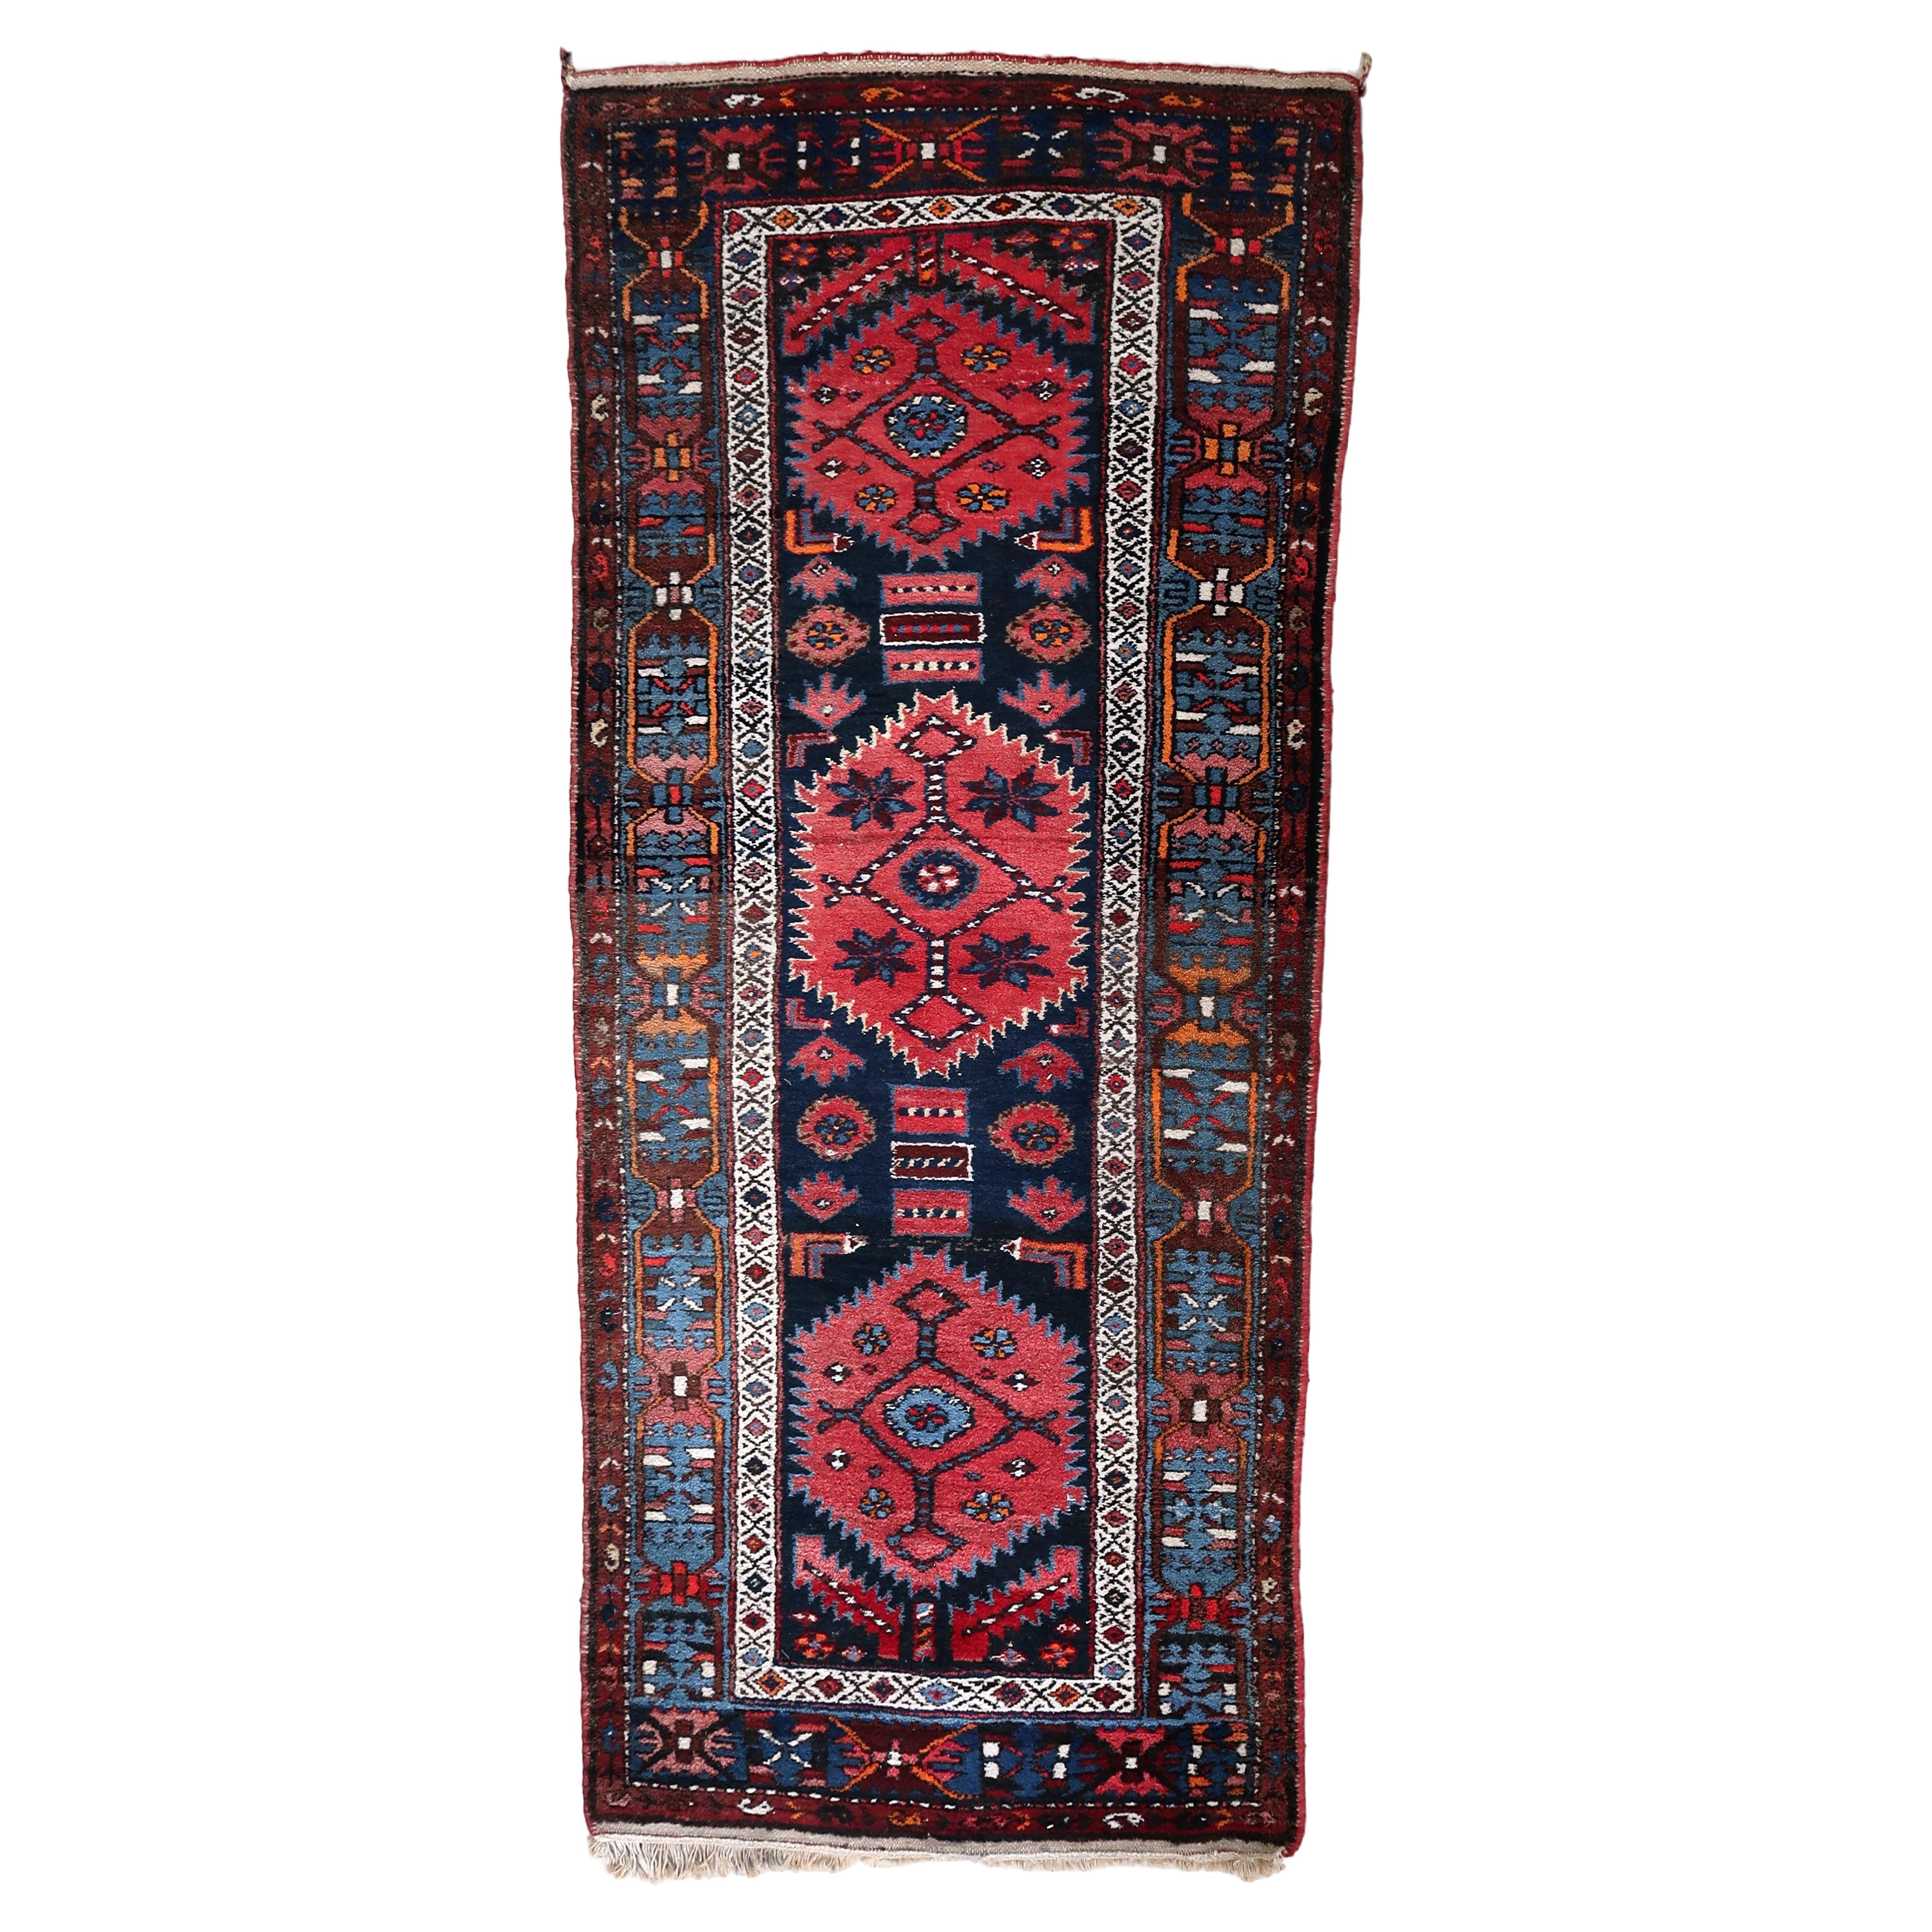 Handmade Antique Persian Style Hamadan Runner Rug 3.4' x 7.7, 1920s - 1C1104 For Sale